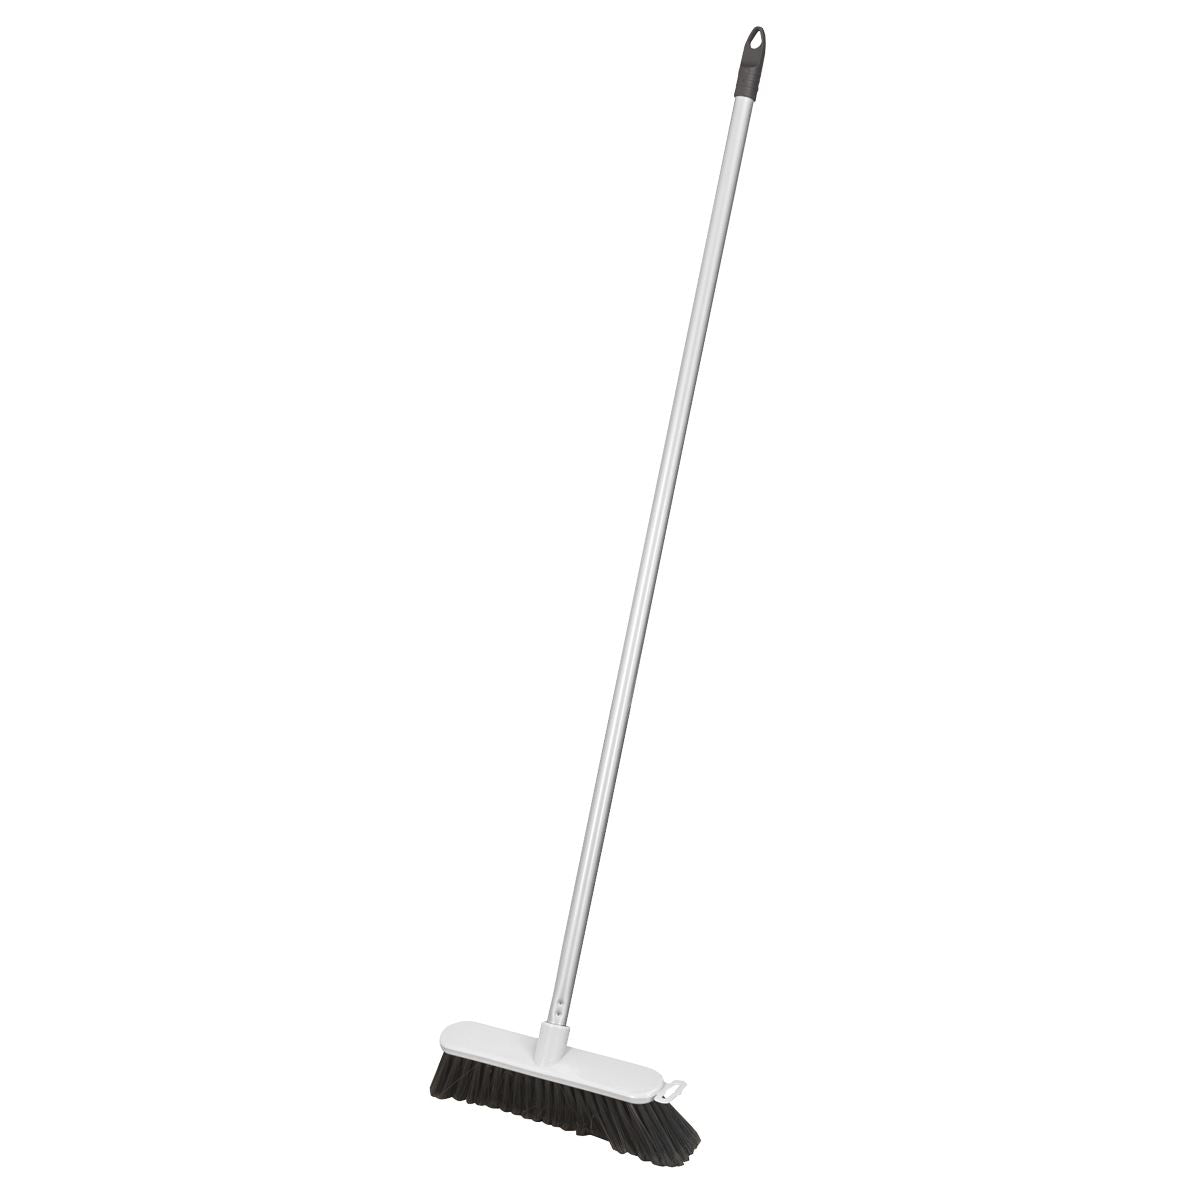 Sealey Broom 11"(280mm) Soft Bristle Indoor Use